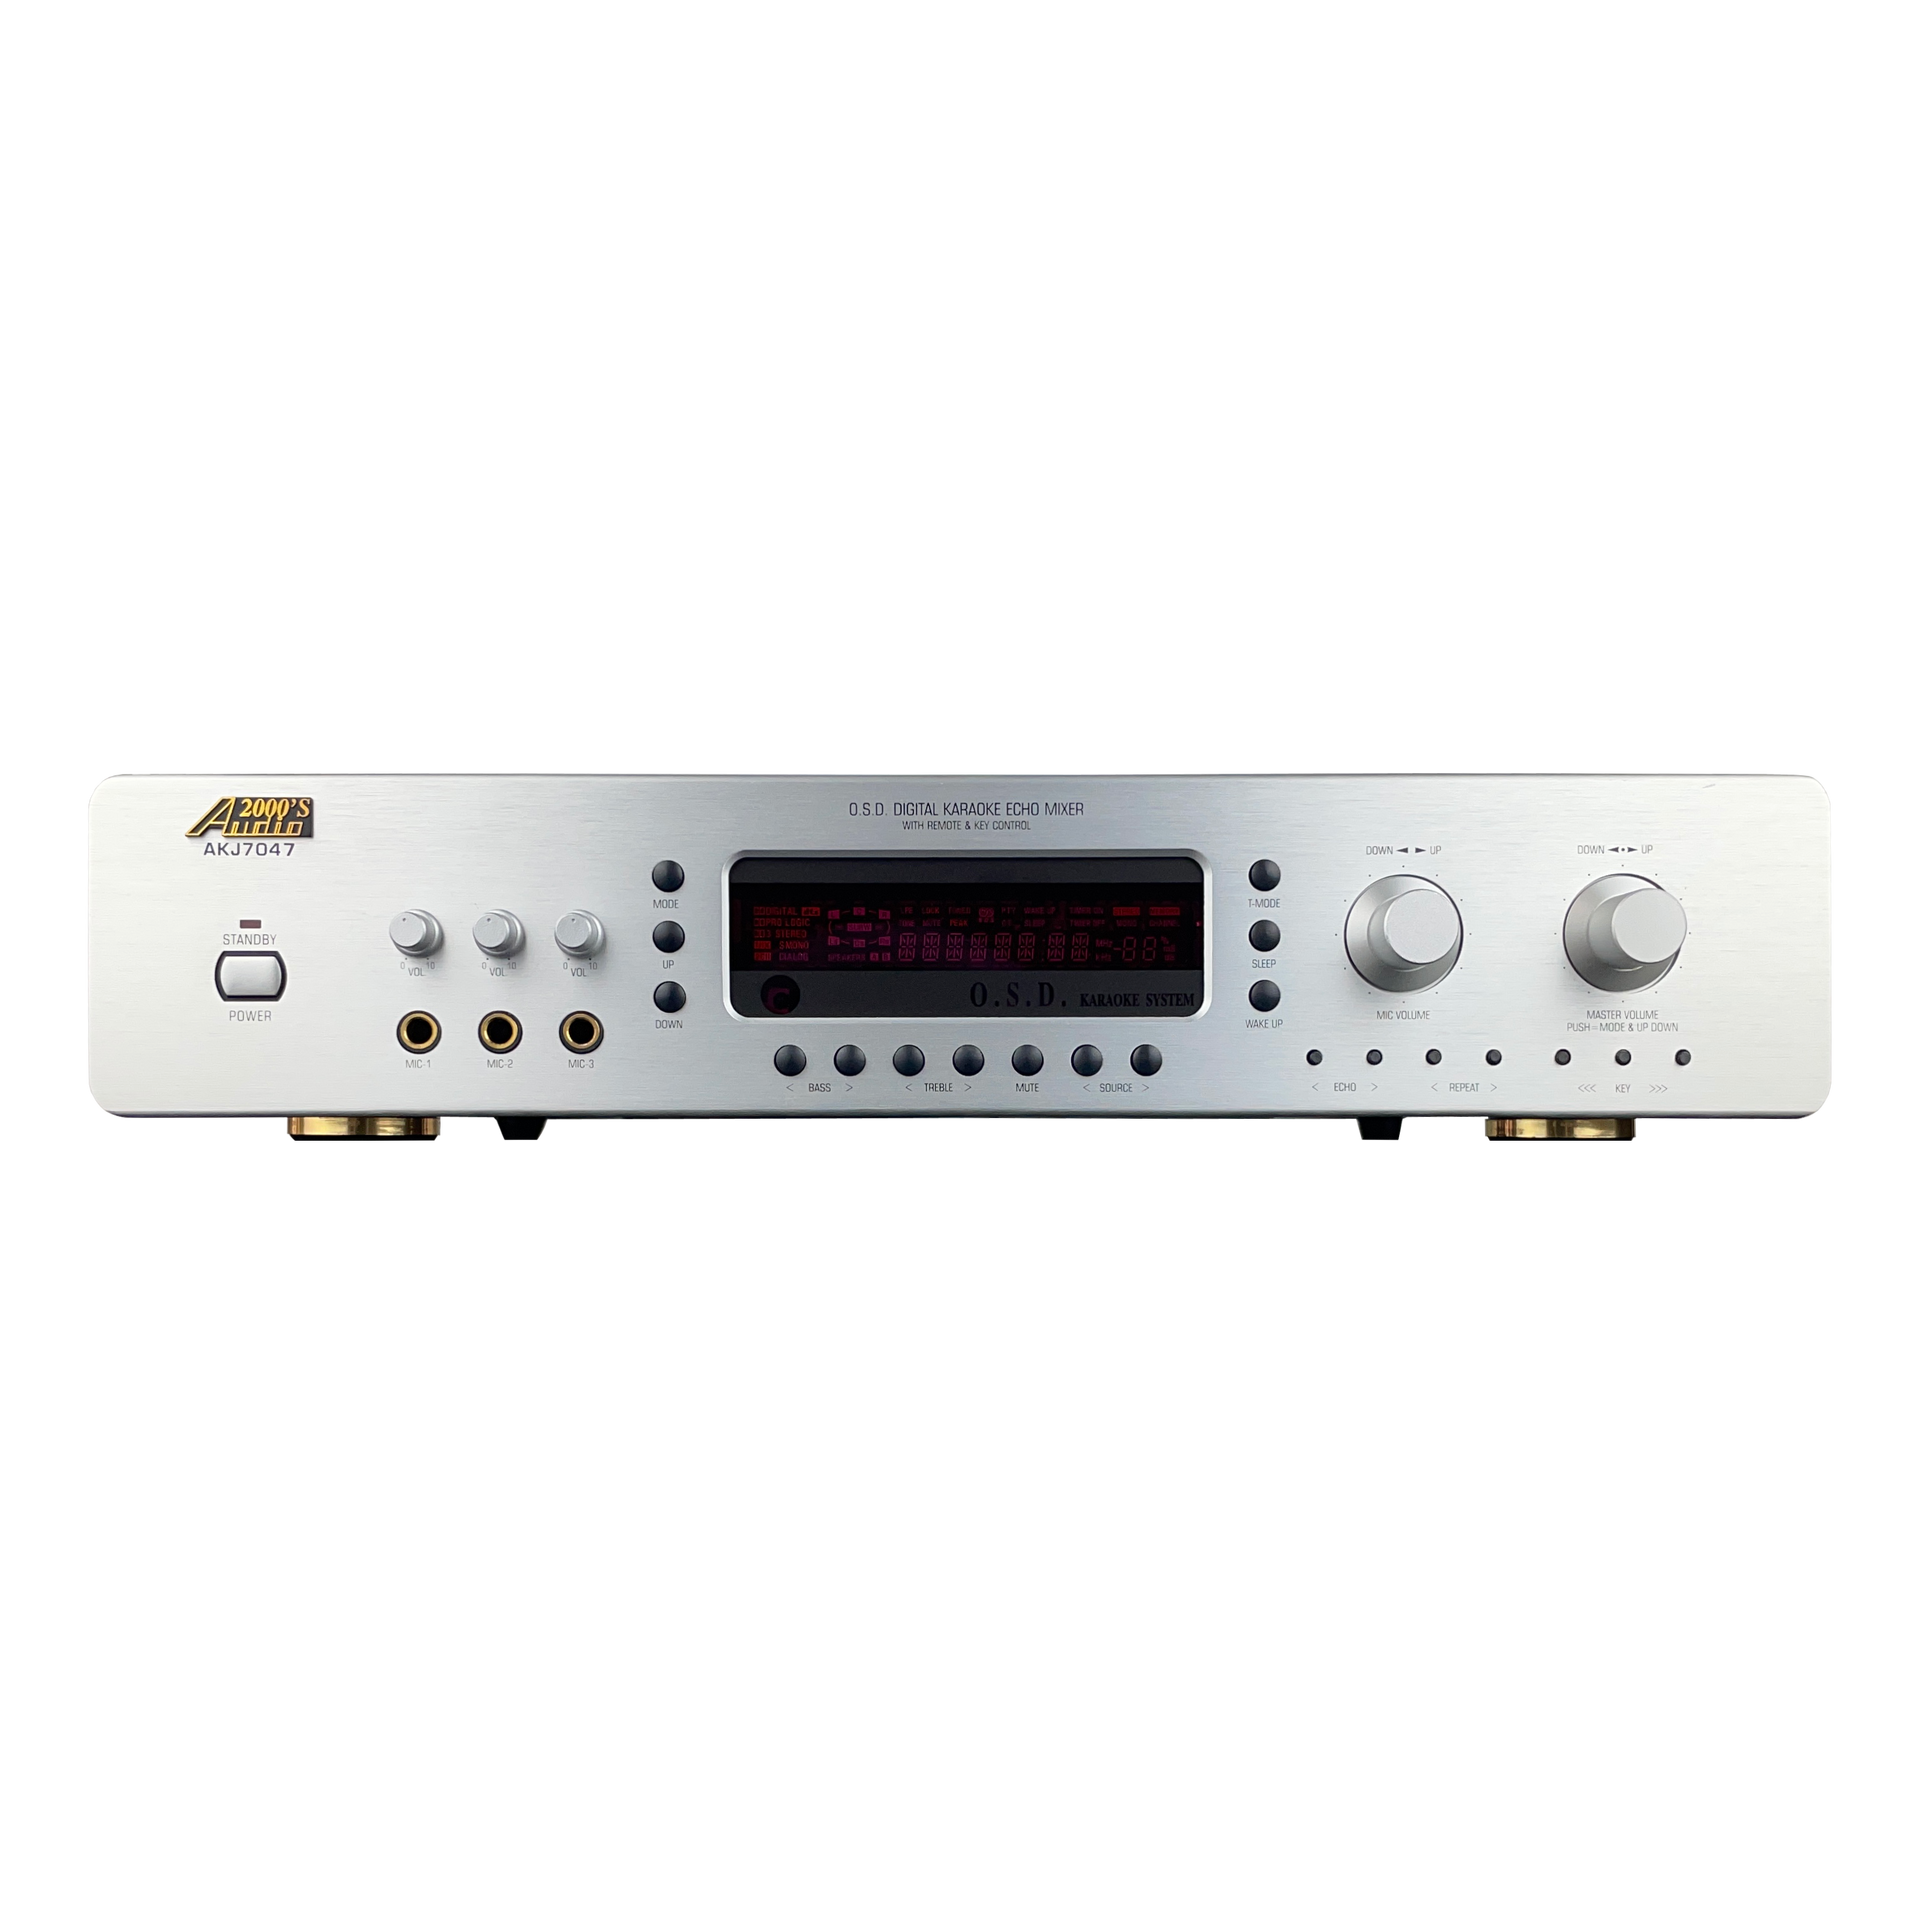 ImPro PMA-9800 Elite Professional 1600W Karaoke Mixing Amplifier for S